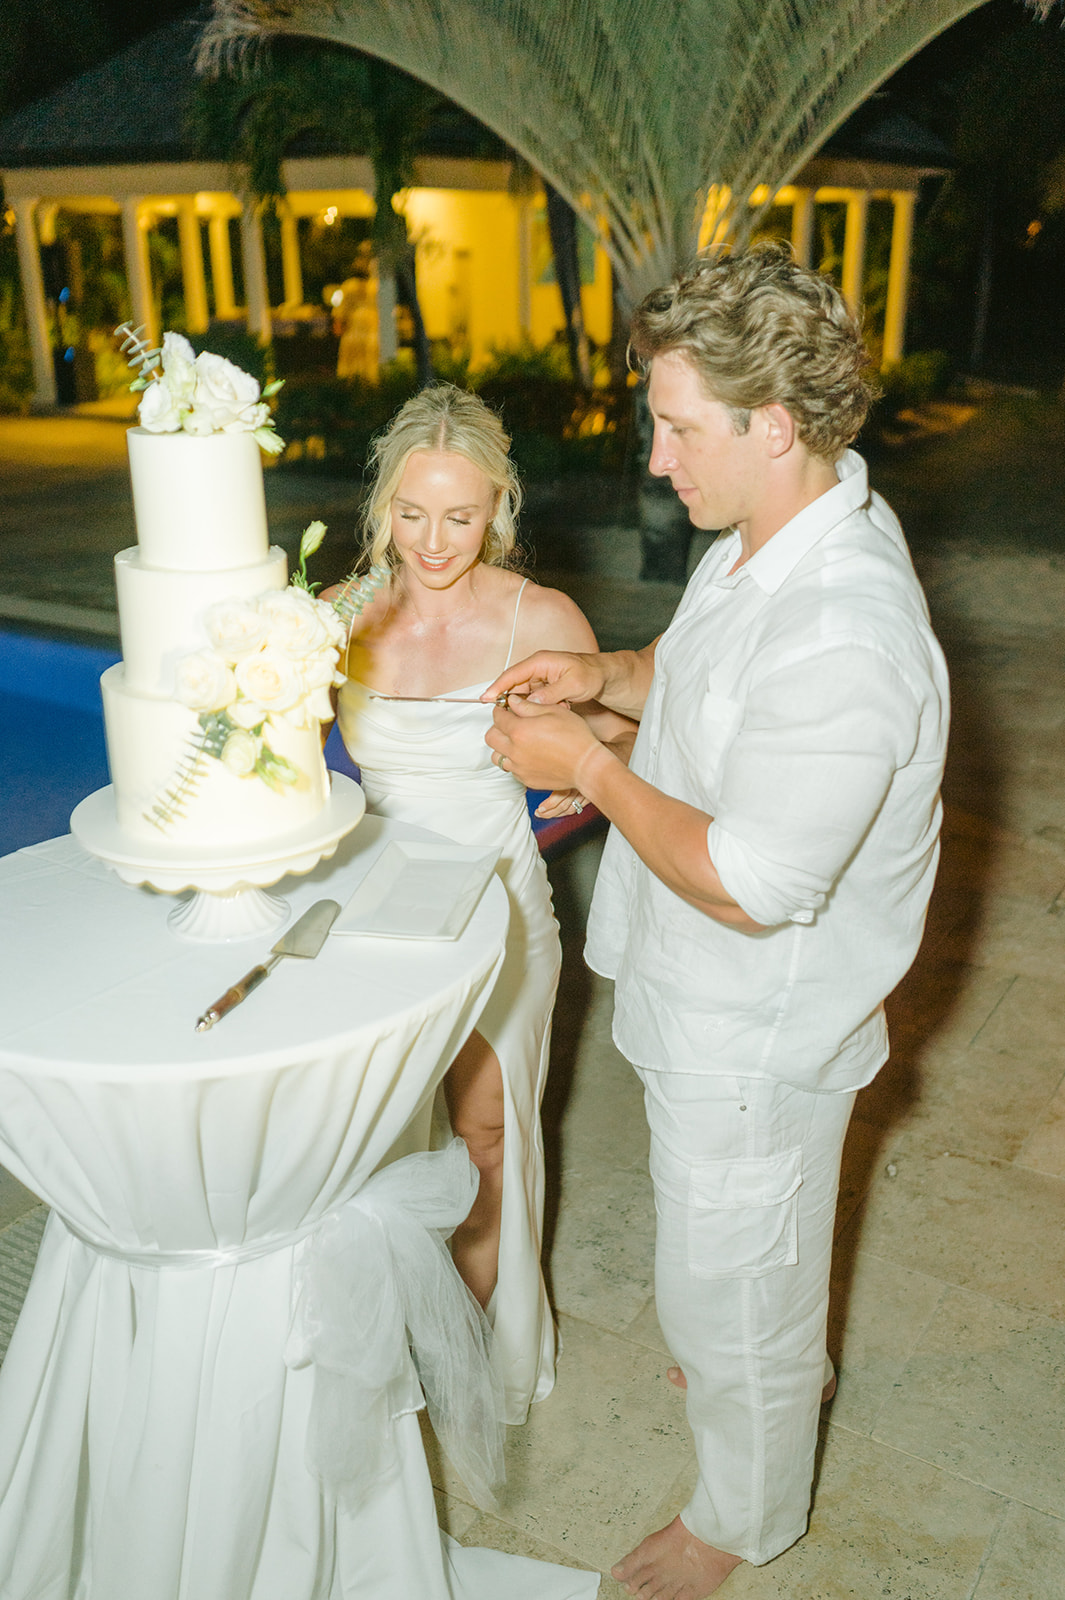 Stunning reception photos from Antigua's luxury weddings
